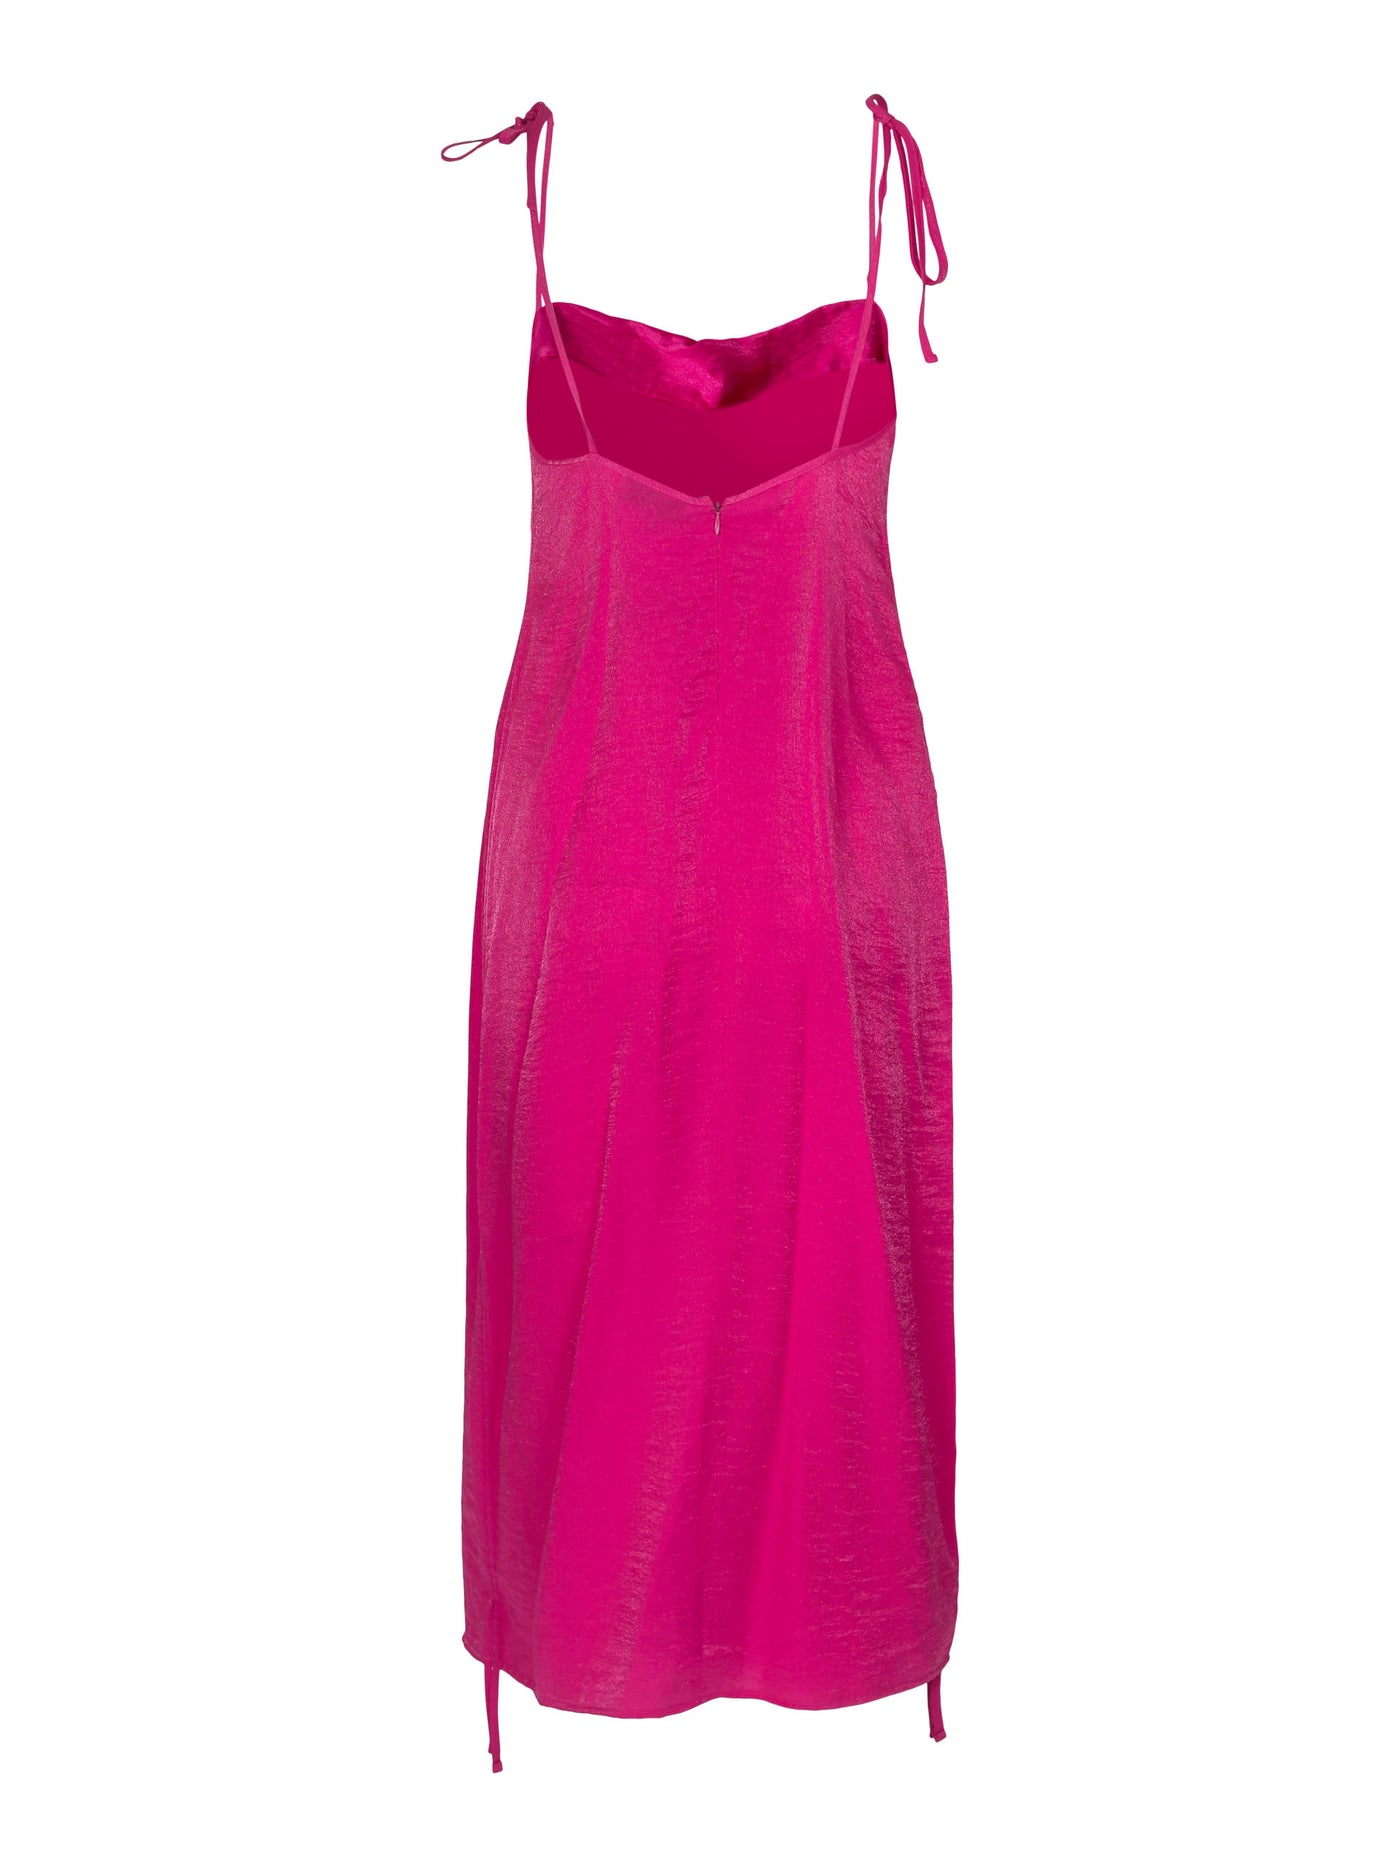 Poison Ivy Dress | Pink Robin